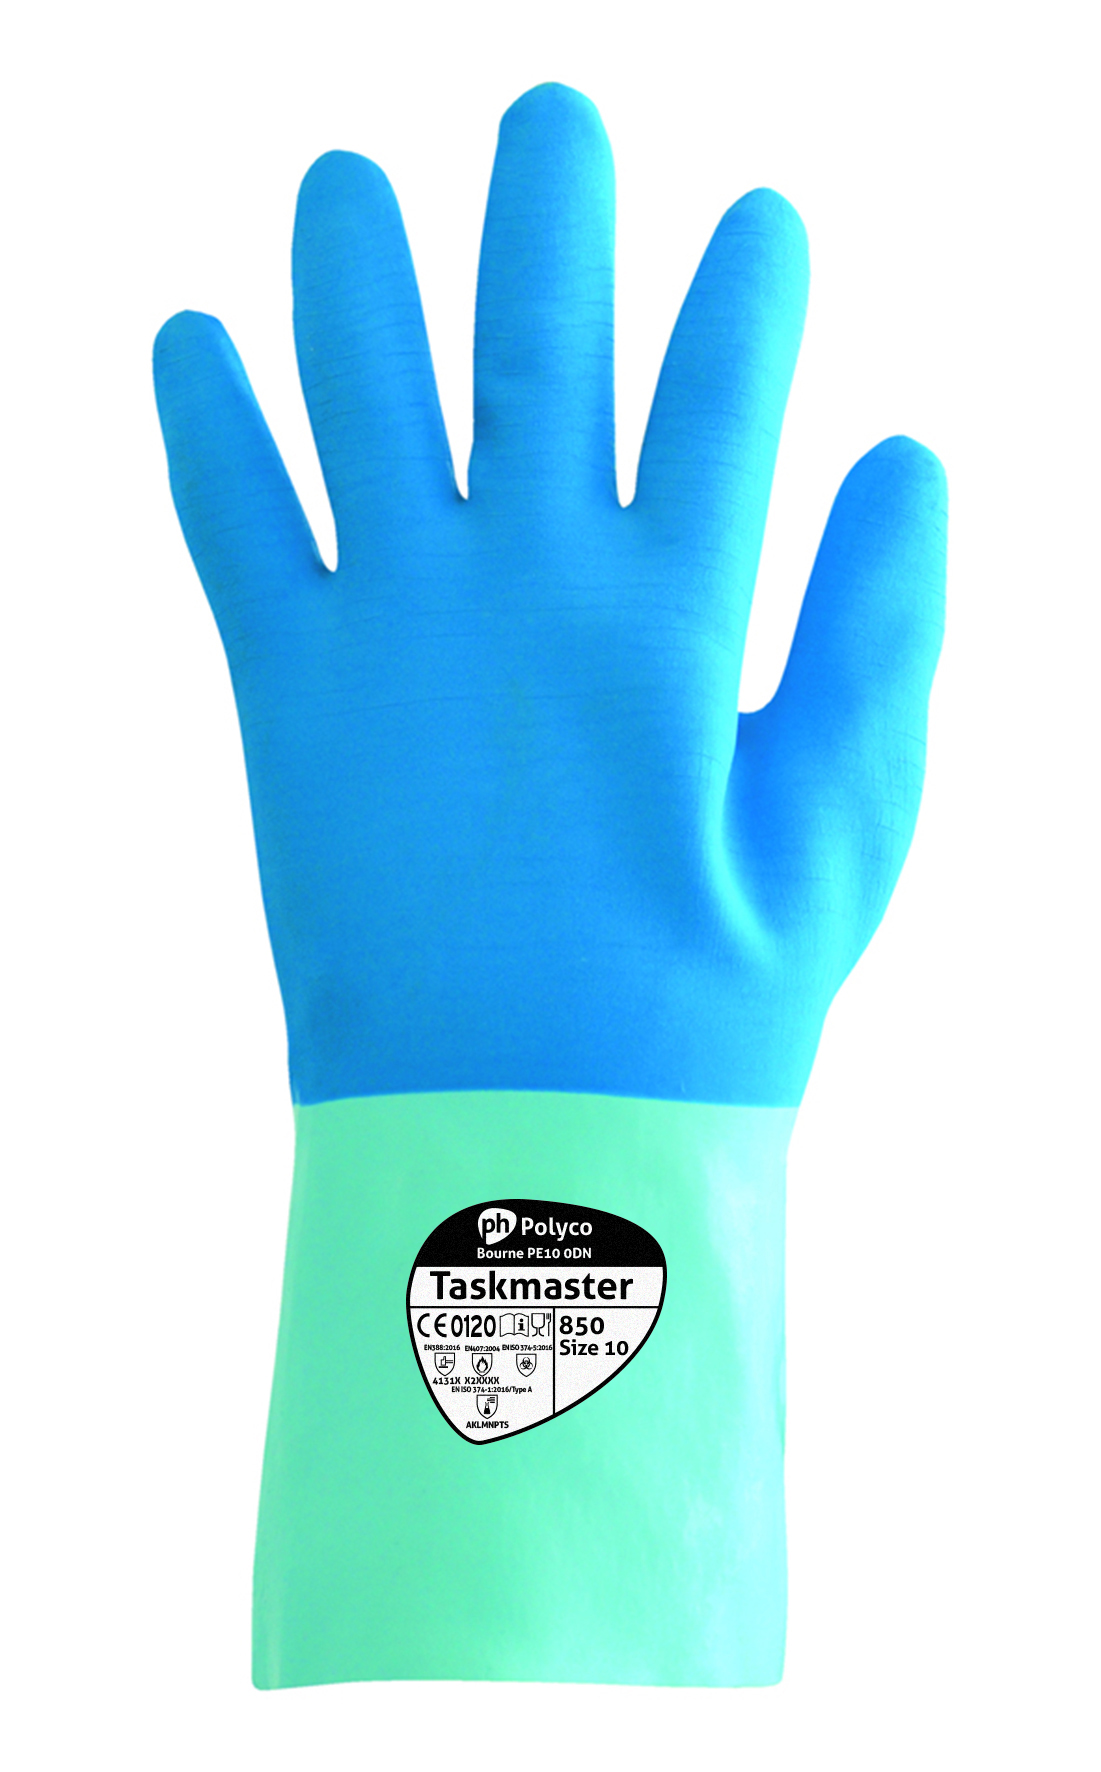 Taskmaster Durable Latex Glove